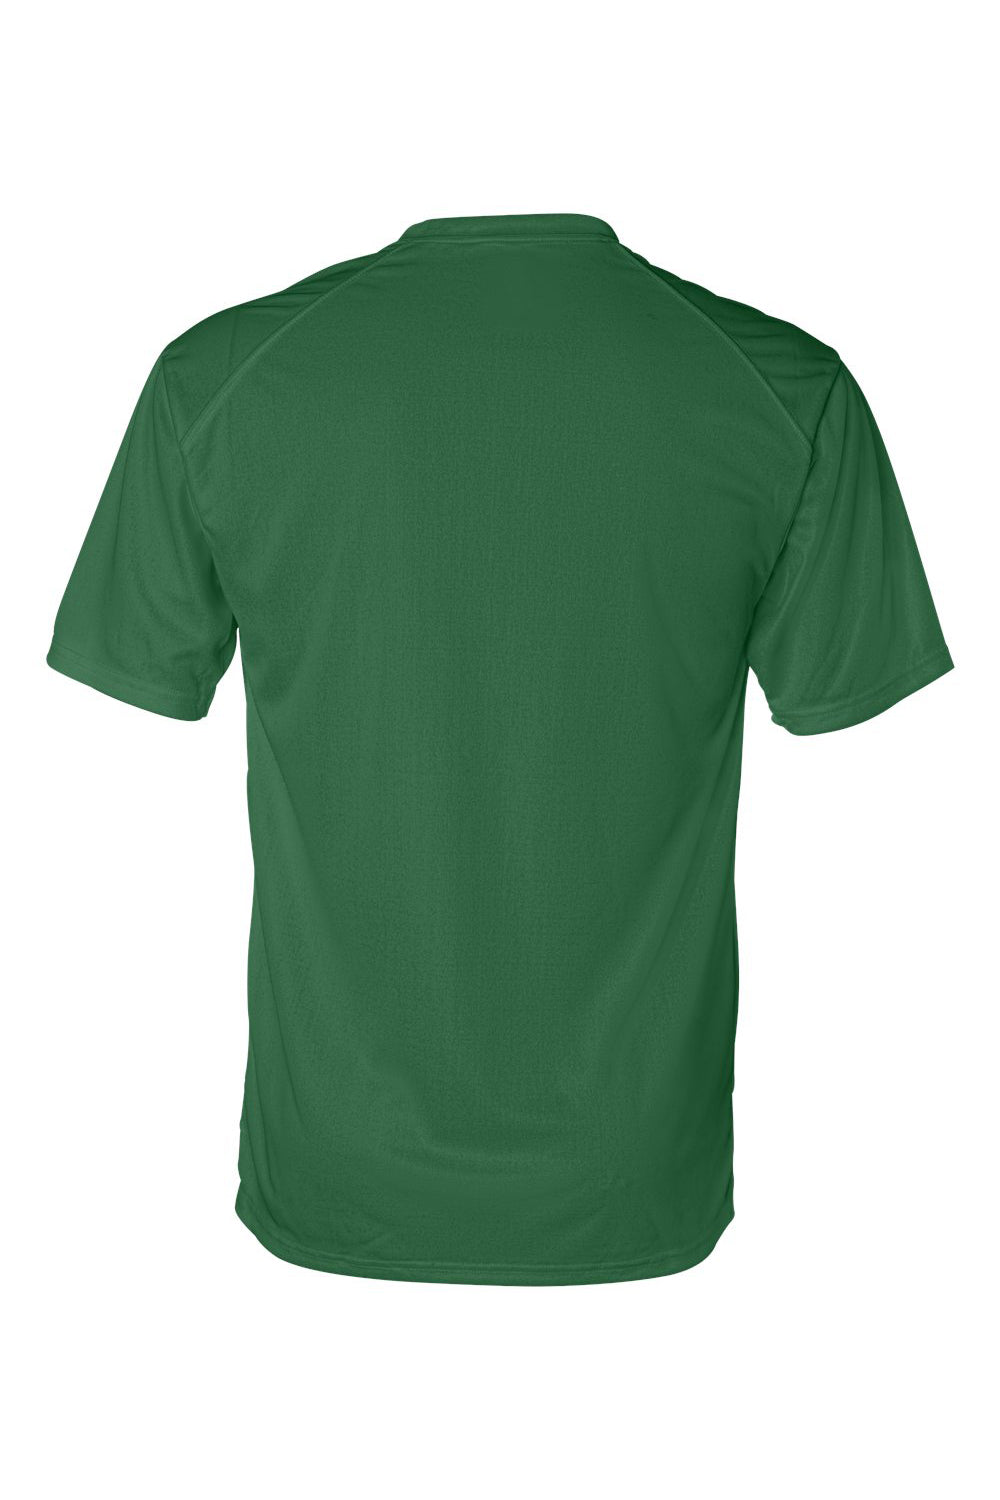 Badger 4120 Mens B-Core Moisture Wicking Short Sleeve Crewneck T-Shirt Kelly Green Flat Back